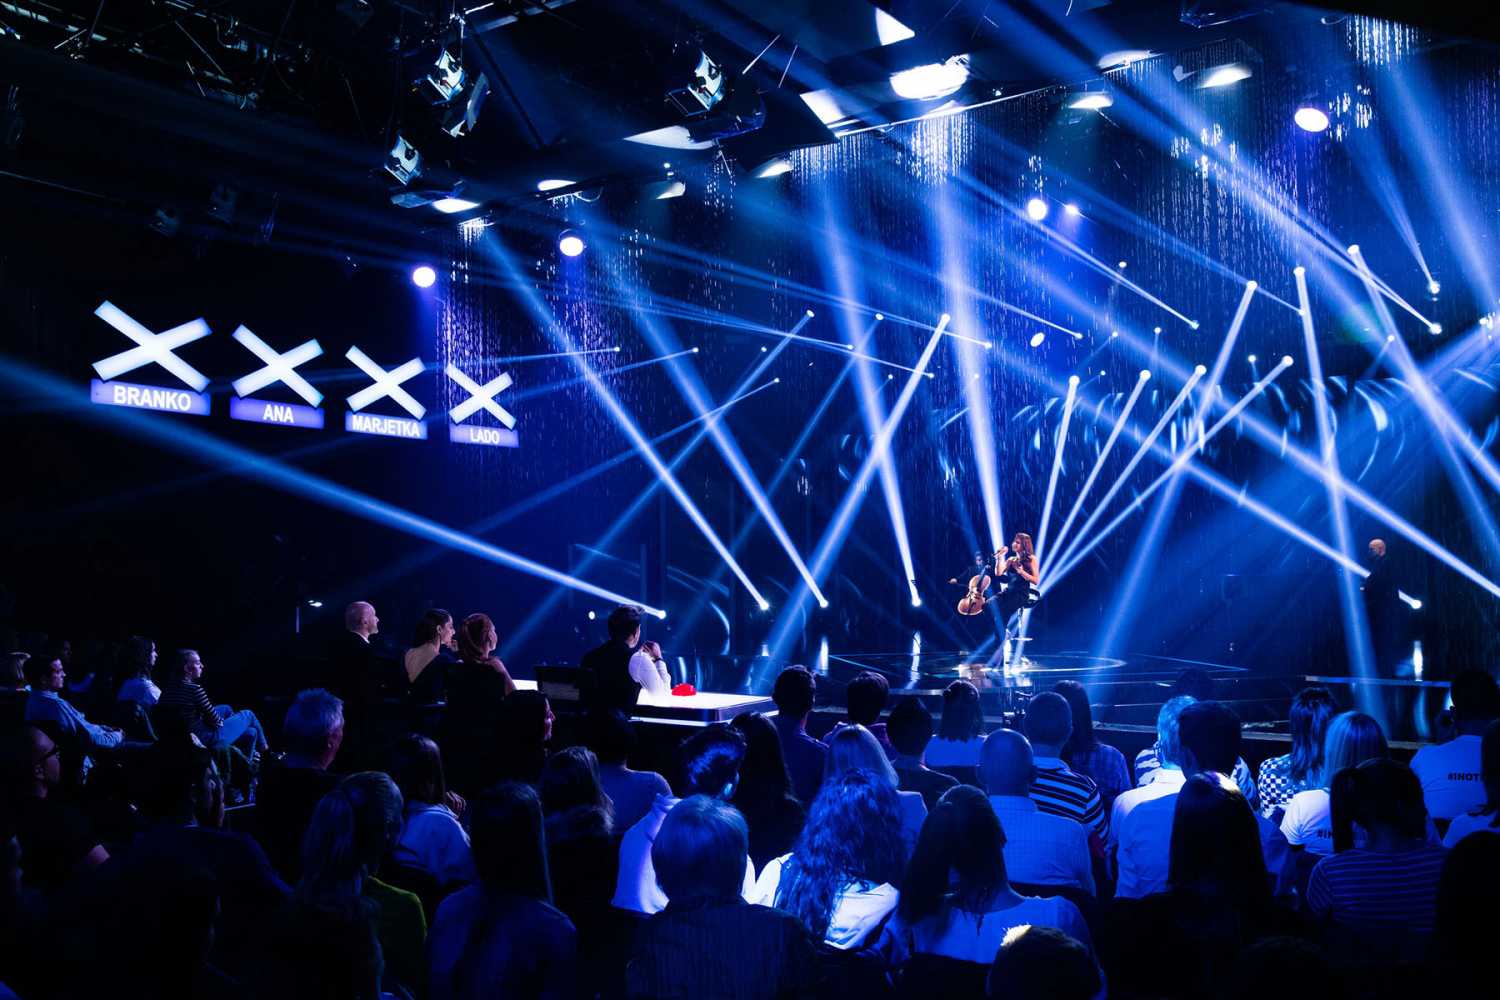 Slovenia’s Got Talent was recorded for broadcaster POP TV in Ljubljana (photo: Miro Majcen)